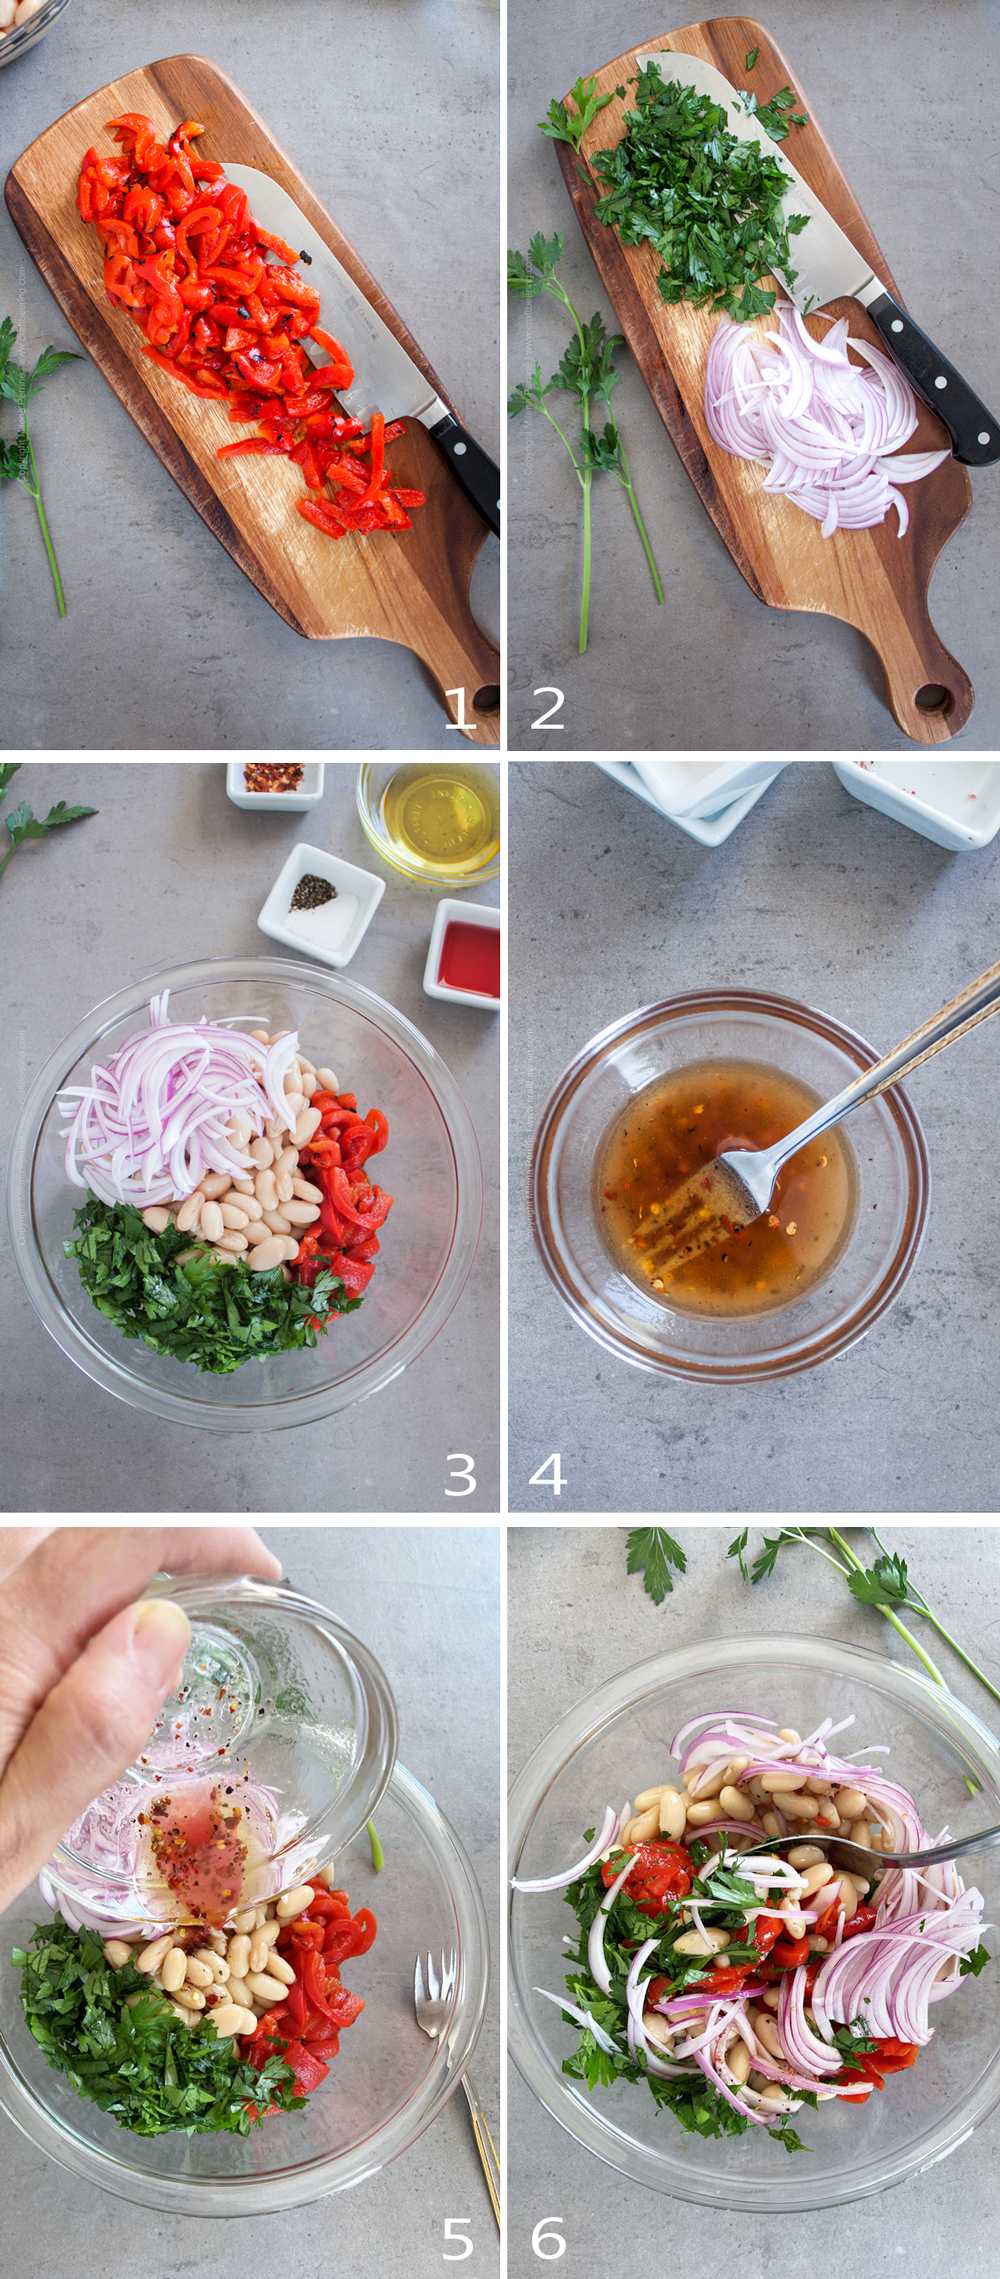 Workflow image grid - steps to make white bean salad. 